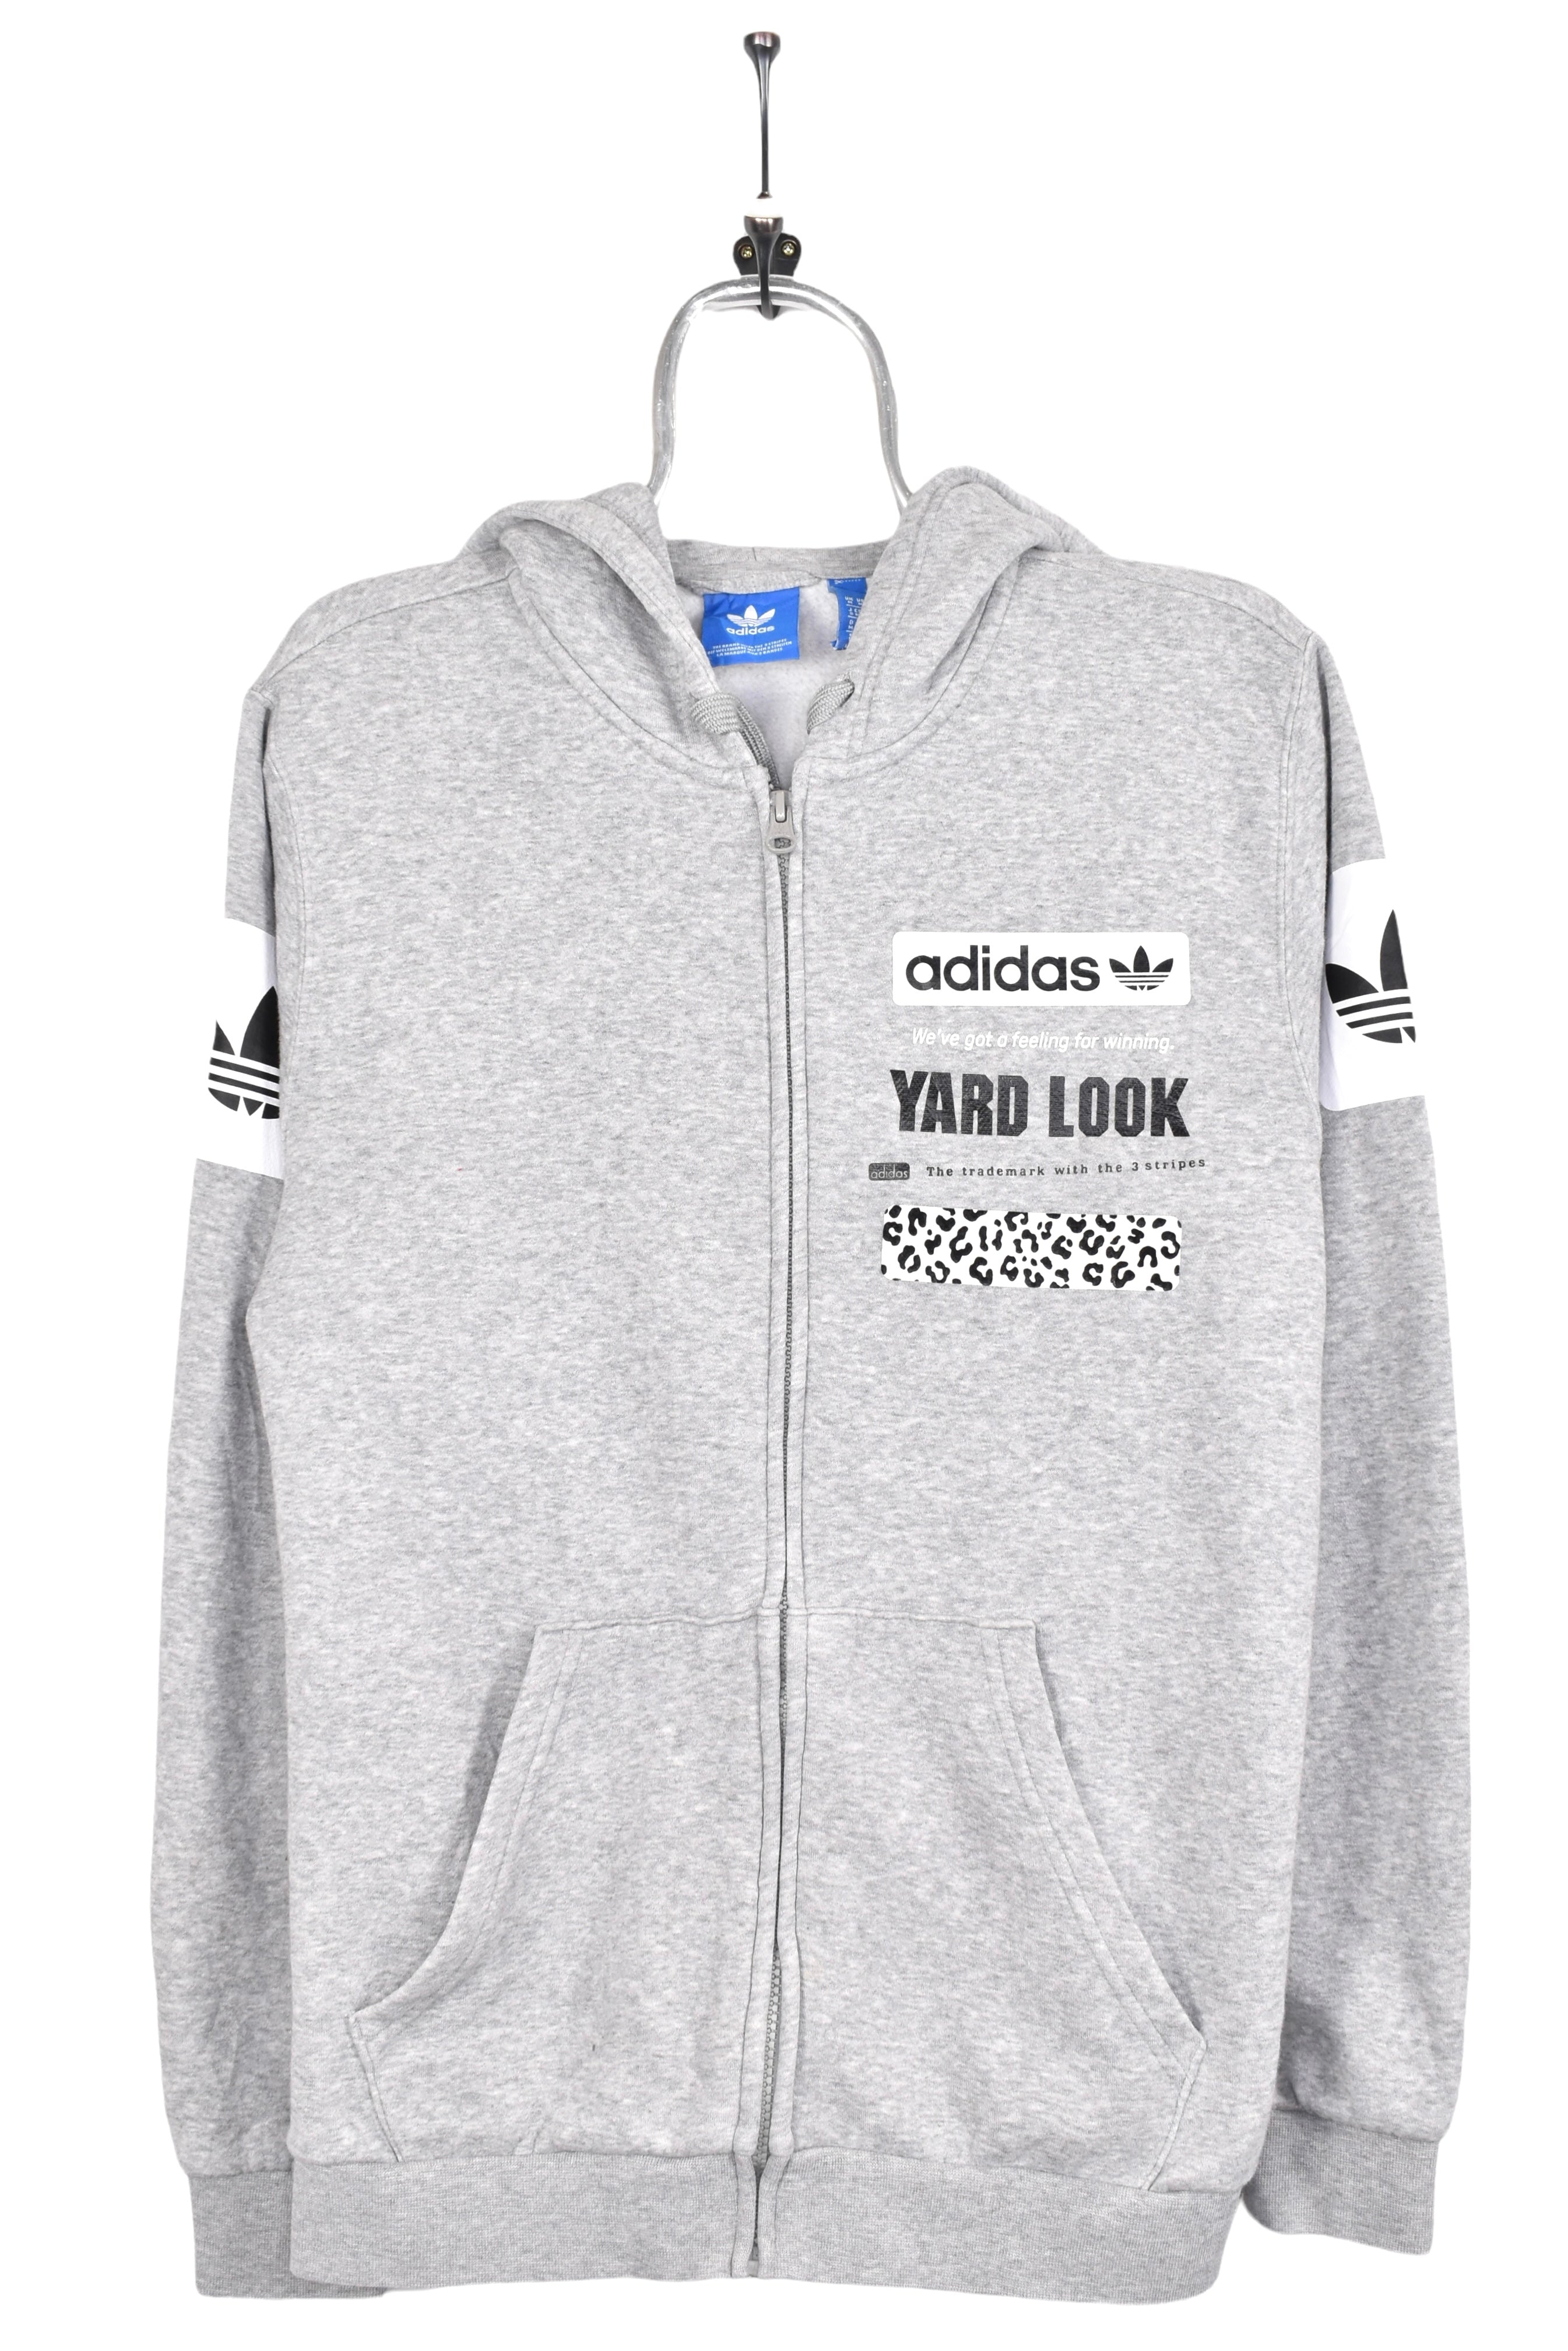 Women's modern Adidas hoodie, grey graphic sweatshirt - AU Large ADIDAS